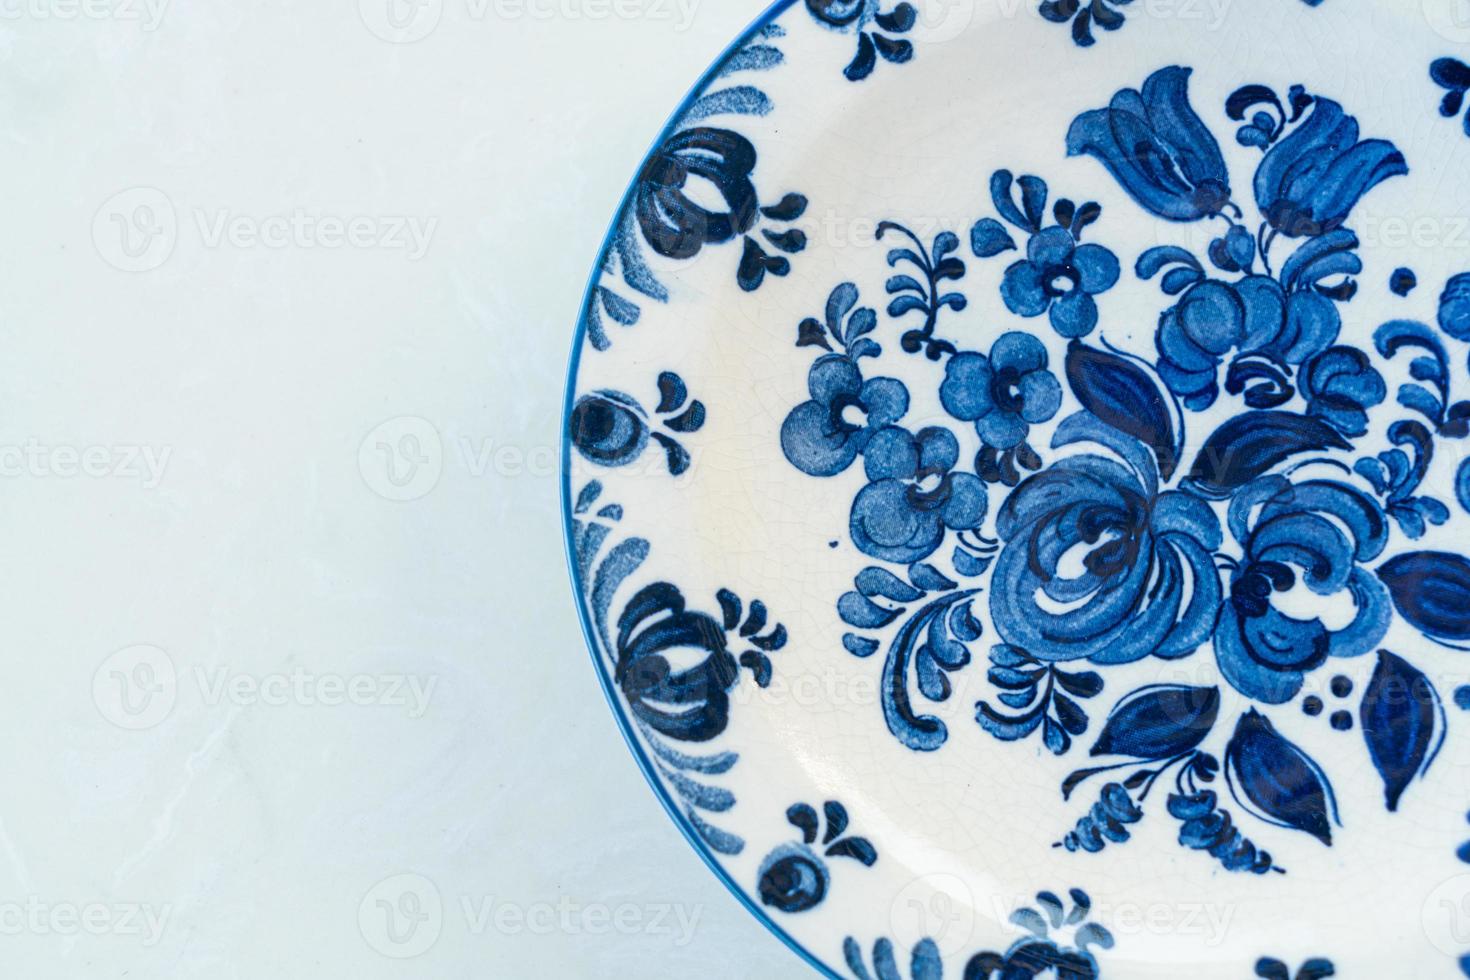 beautiful vintage porcelain plate on table photo